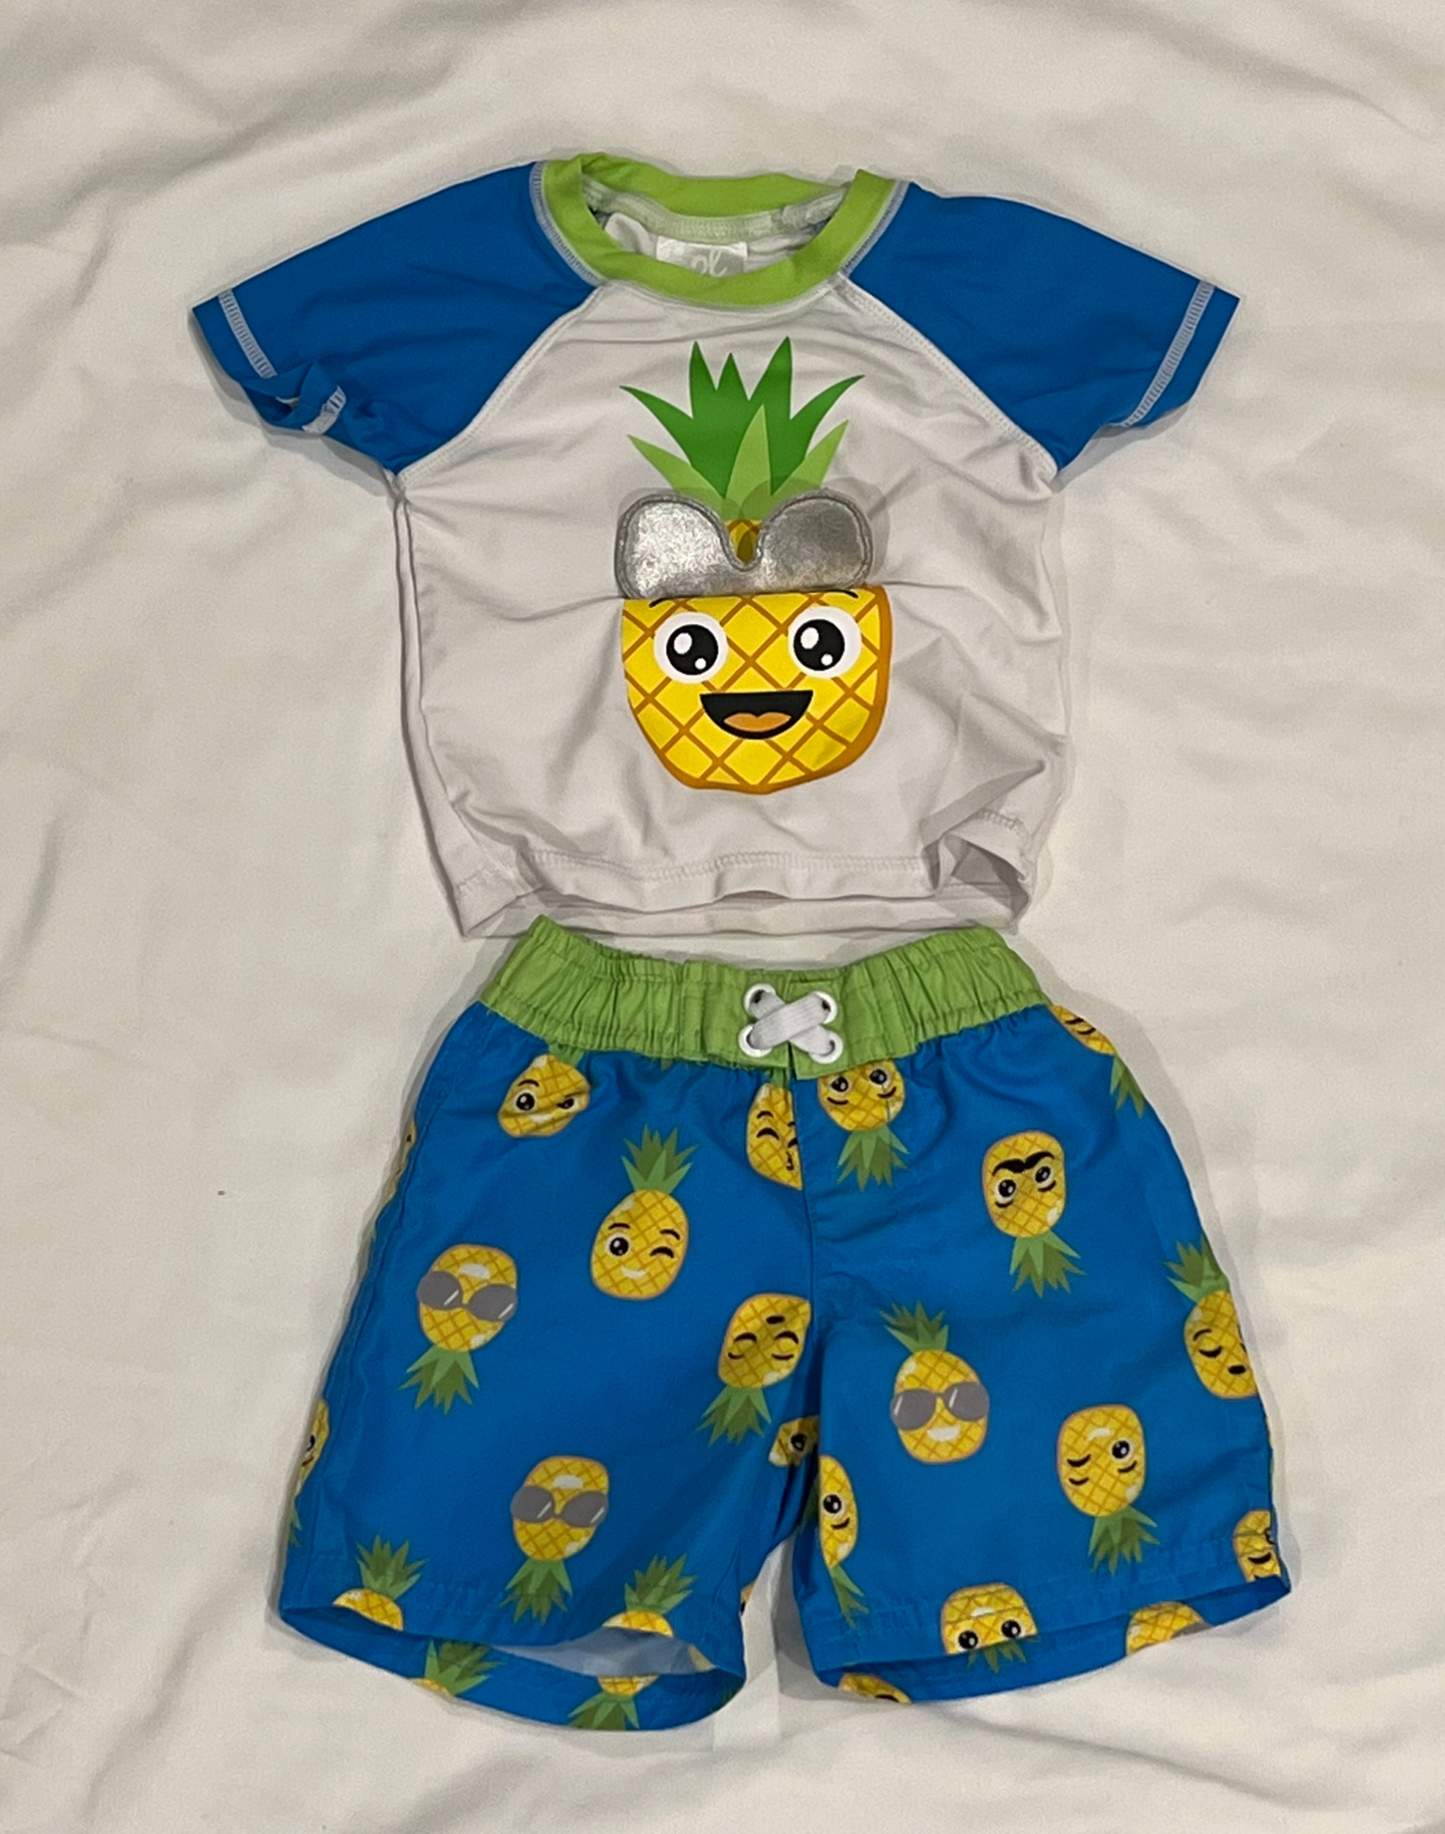 Baby boy 3-6 month swim suit set